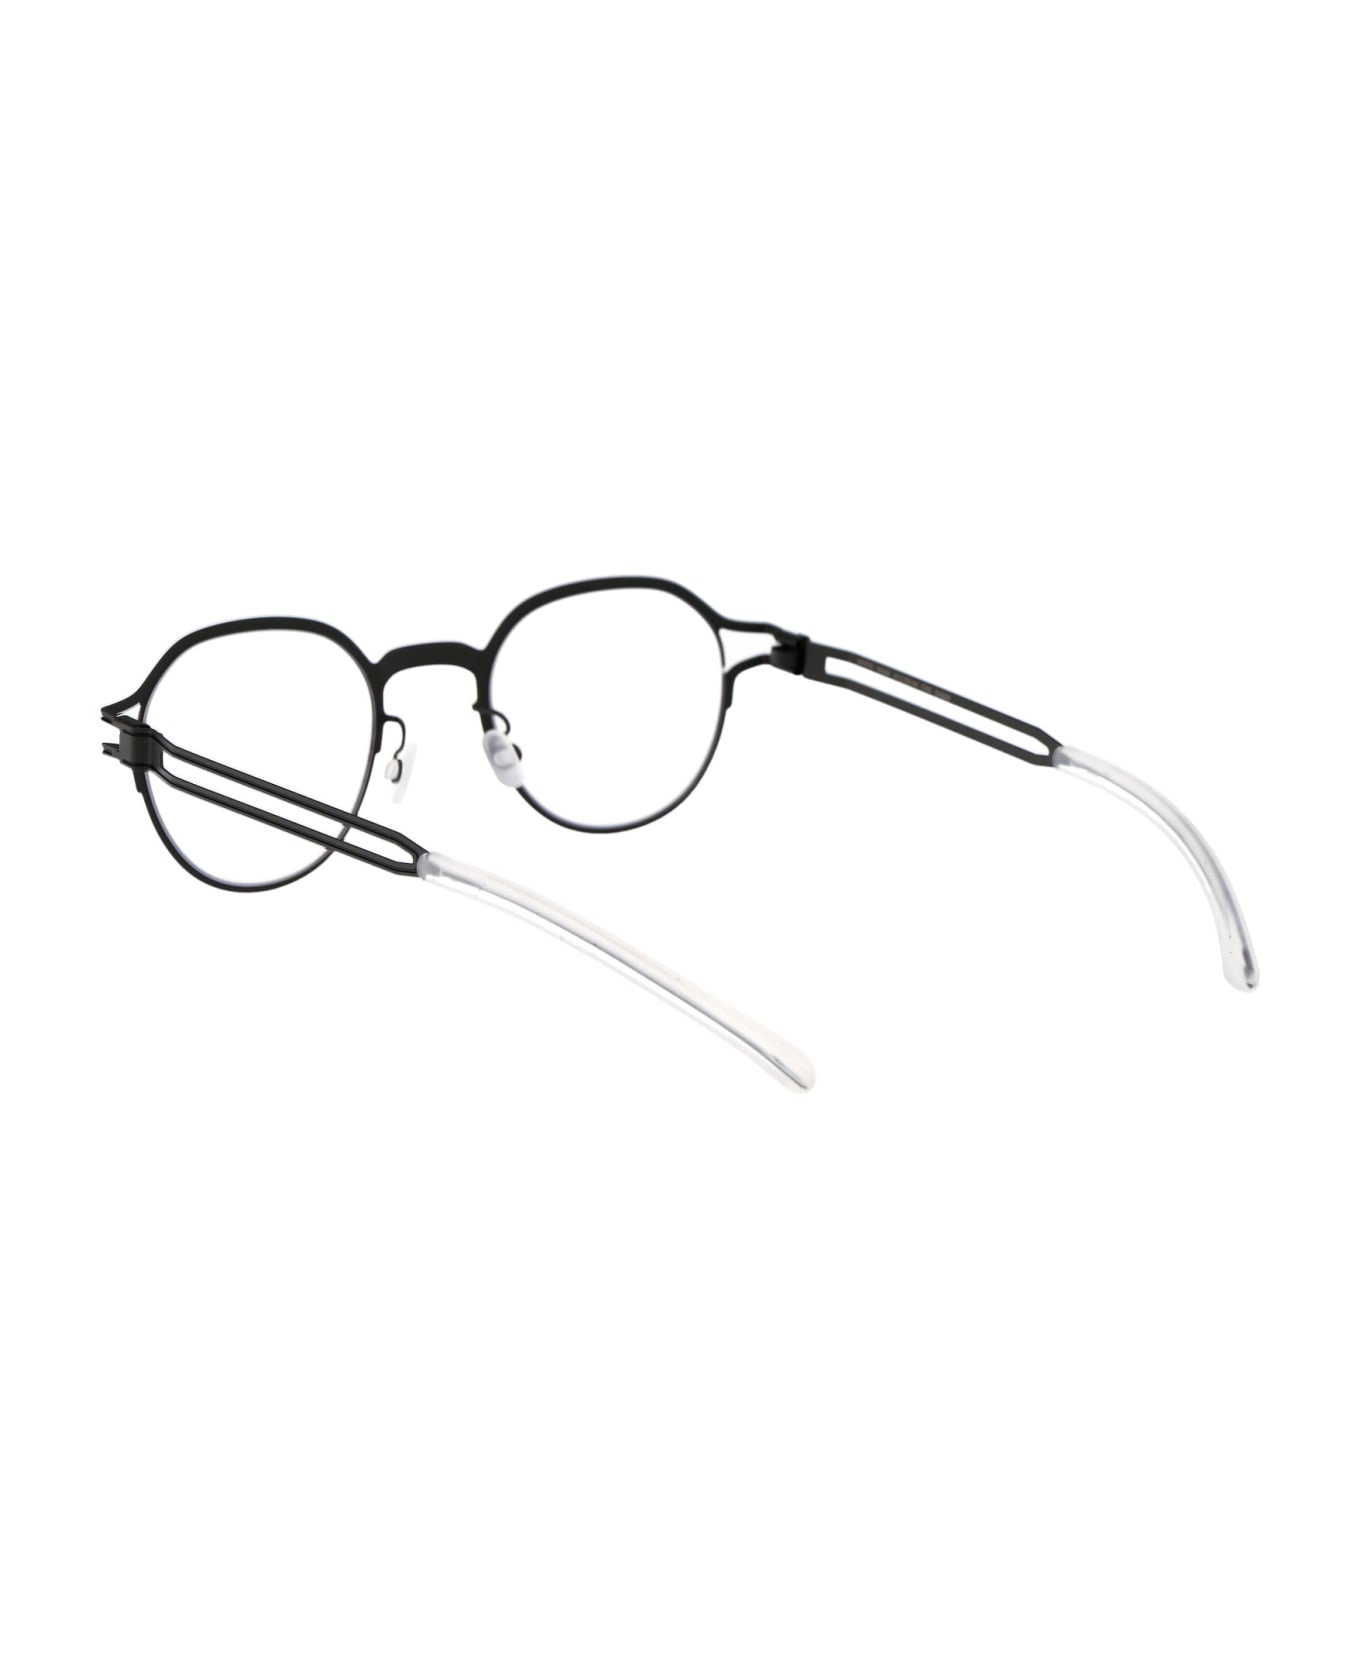 Mykita Vaasa Glasses - 515 Storm Grey/Black Clear アイウェア